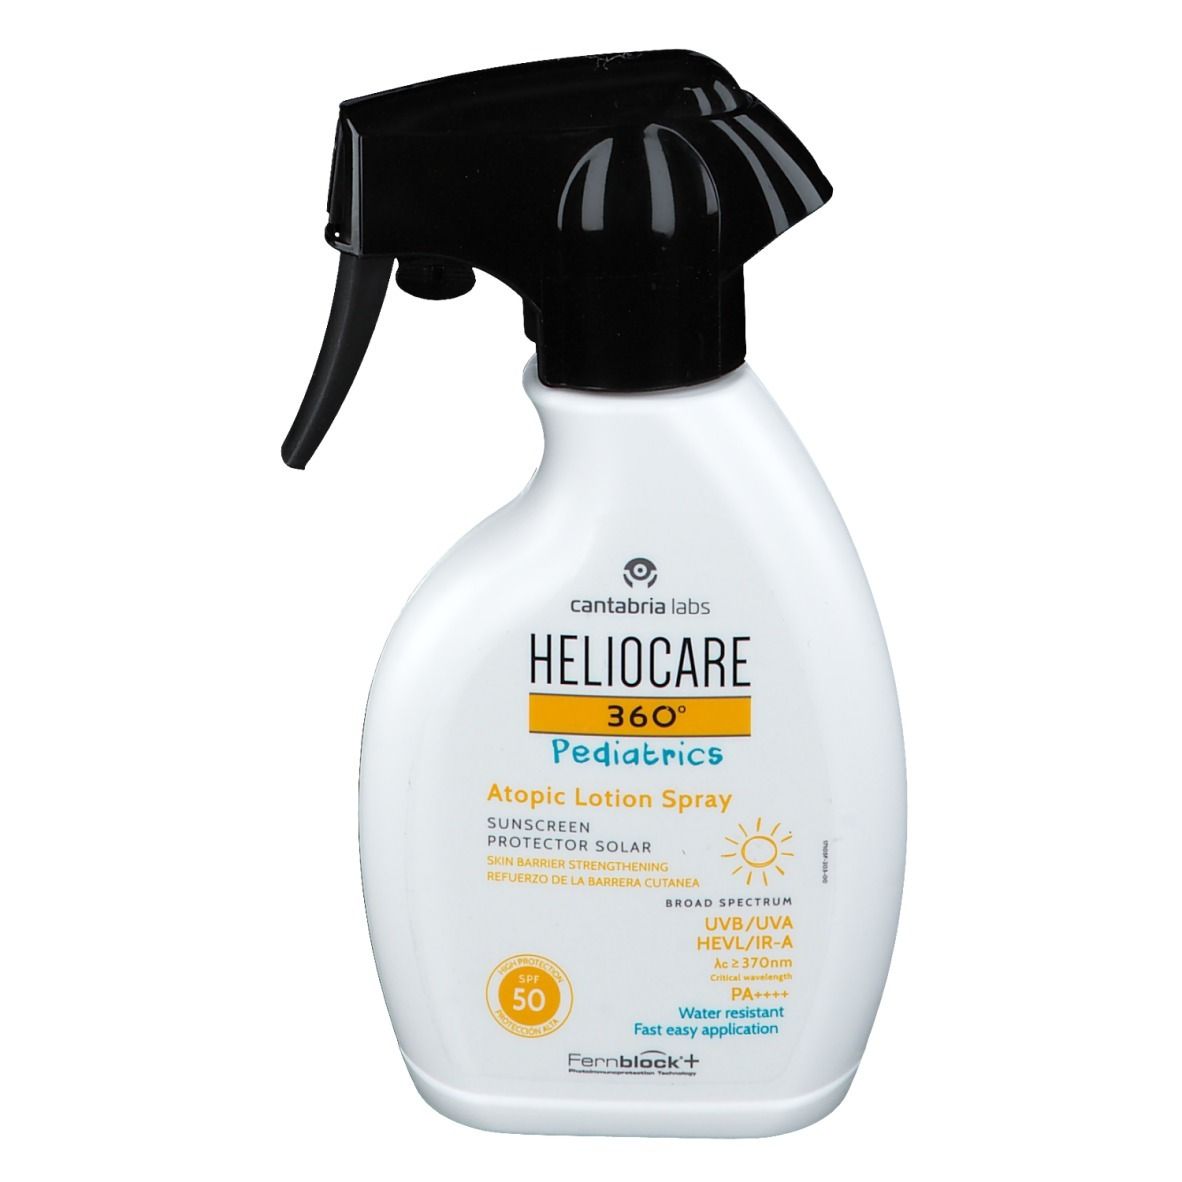 Image of Heliocare 360 ° Pediatrics Lotion Spray LSF 50+